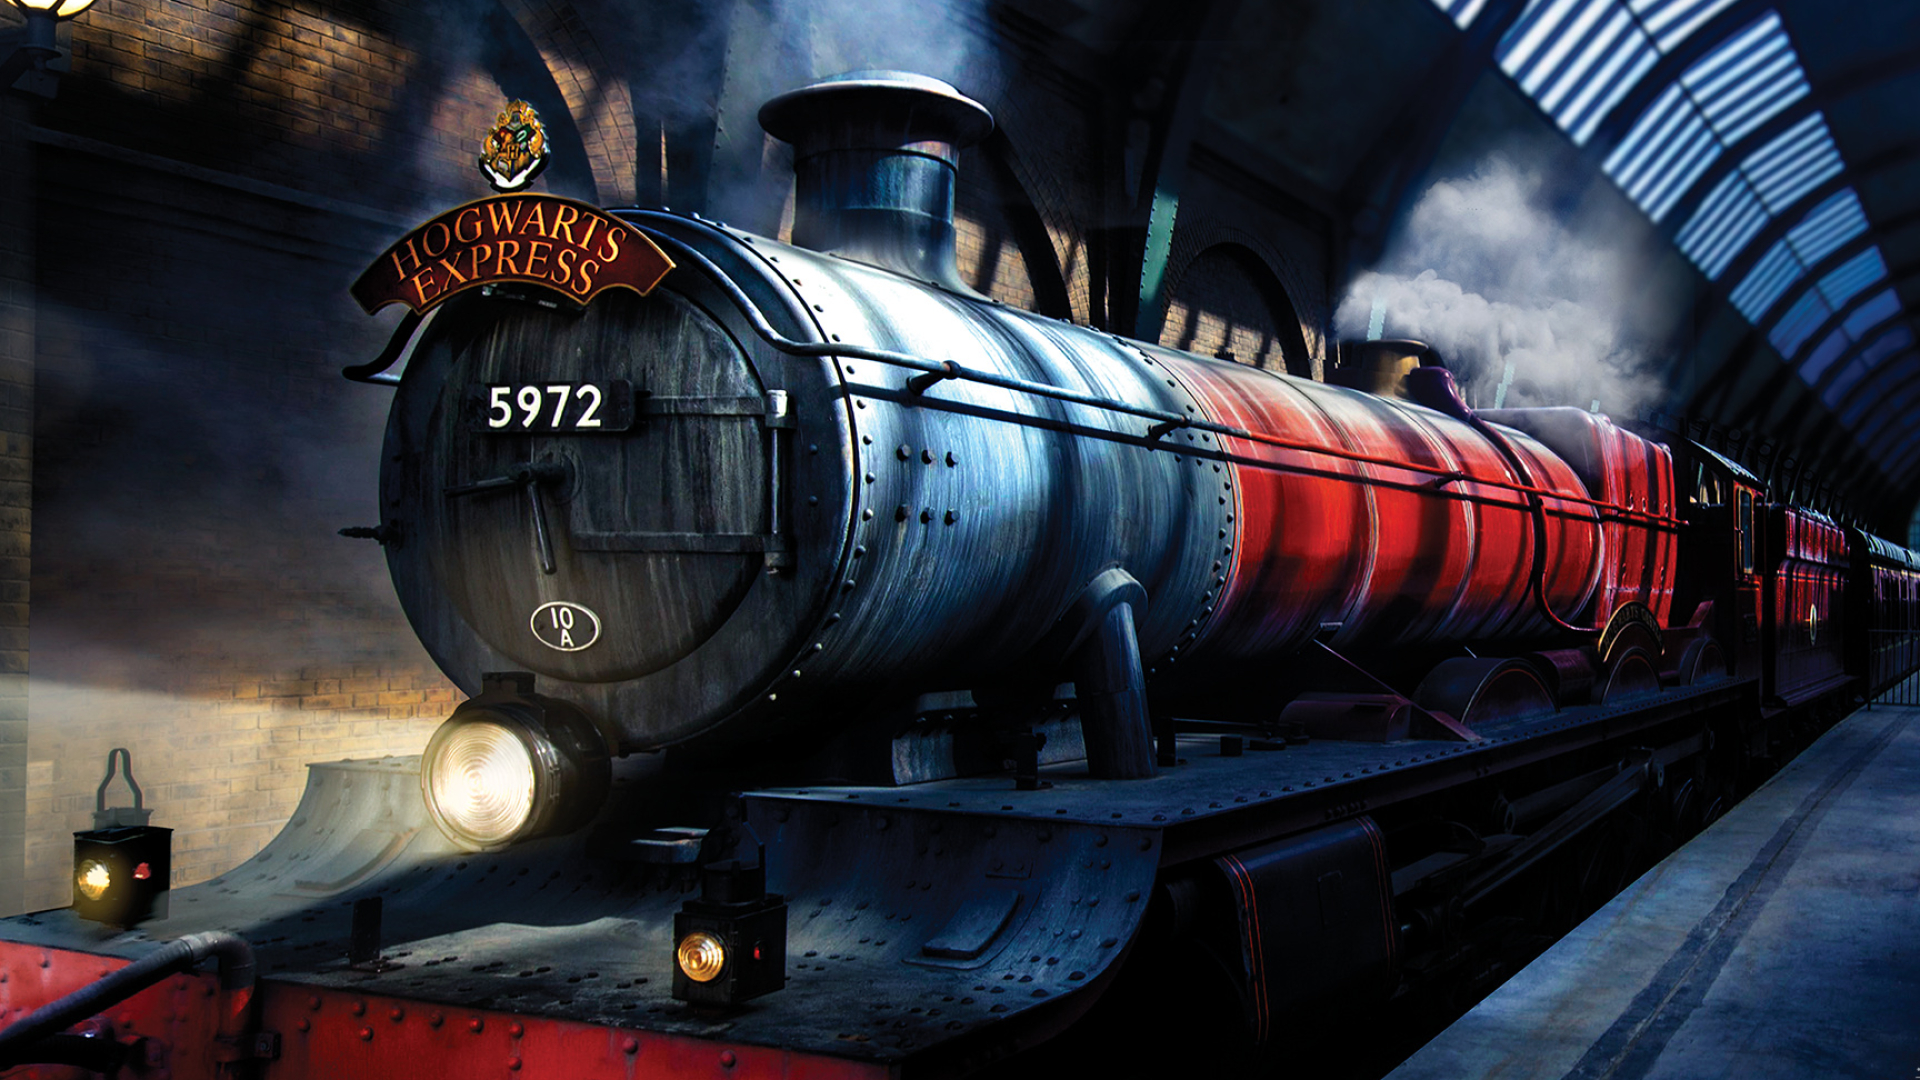 Platform 9 3/4 movies, Harry Potter train wallpapers, Magical locomotives, Hogwarts transportation, 1920x1080 Full HD Desktop